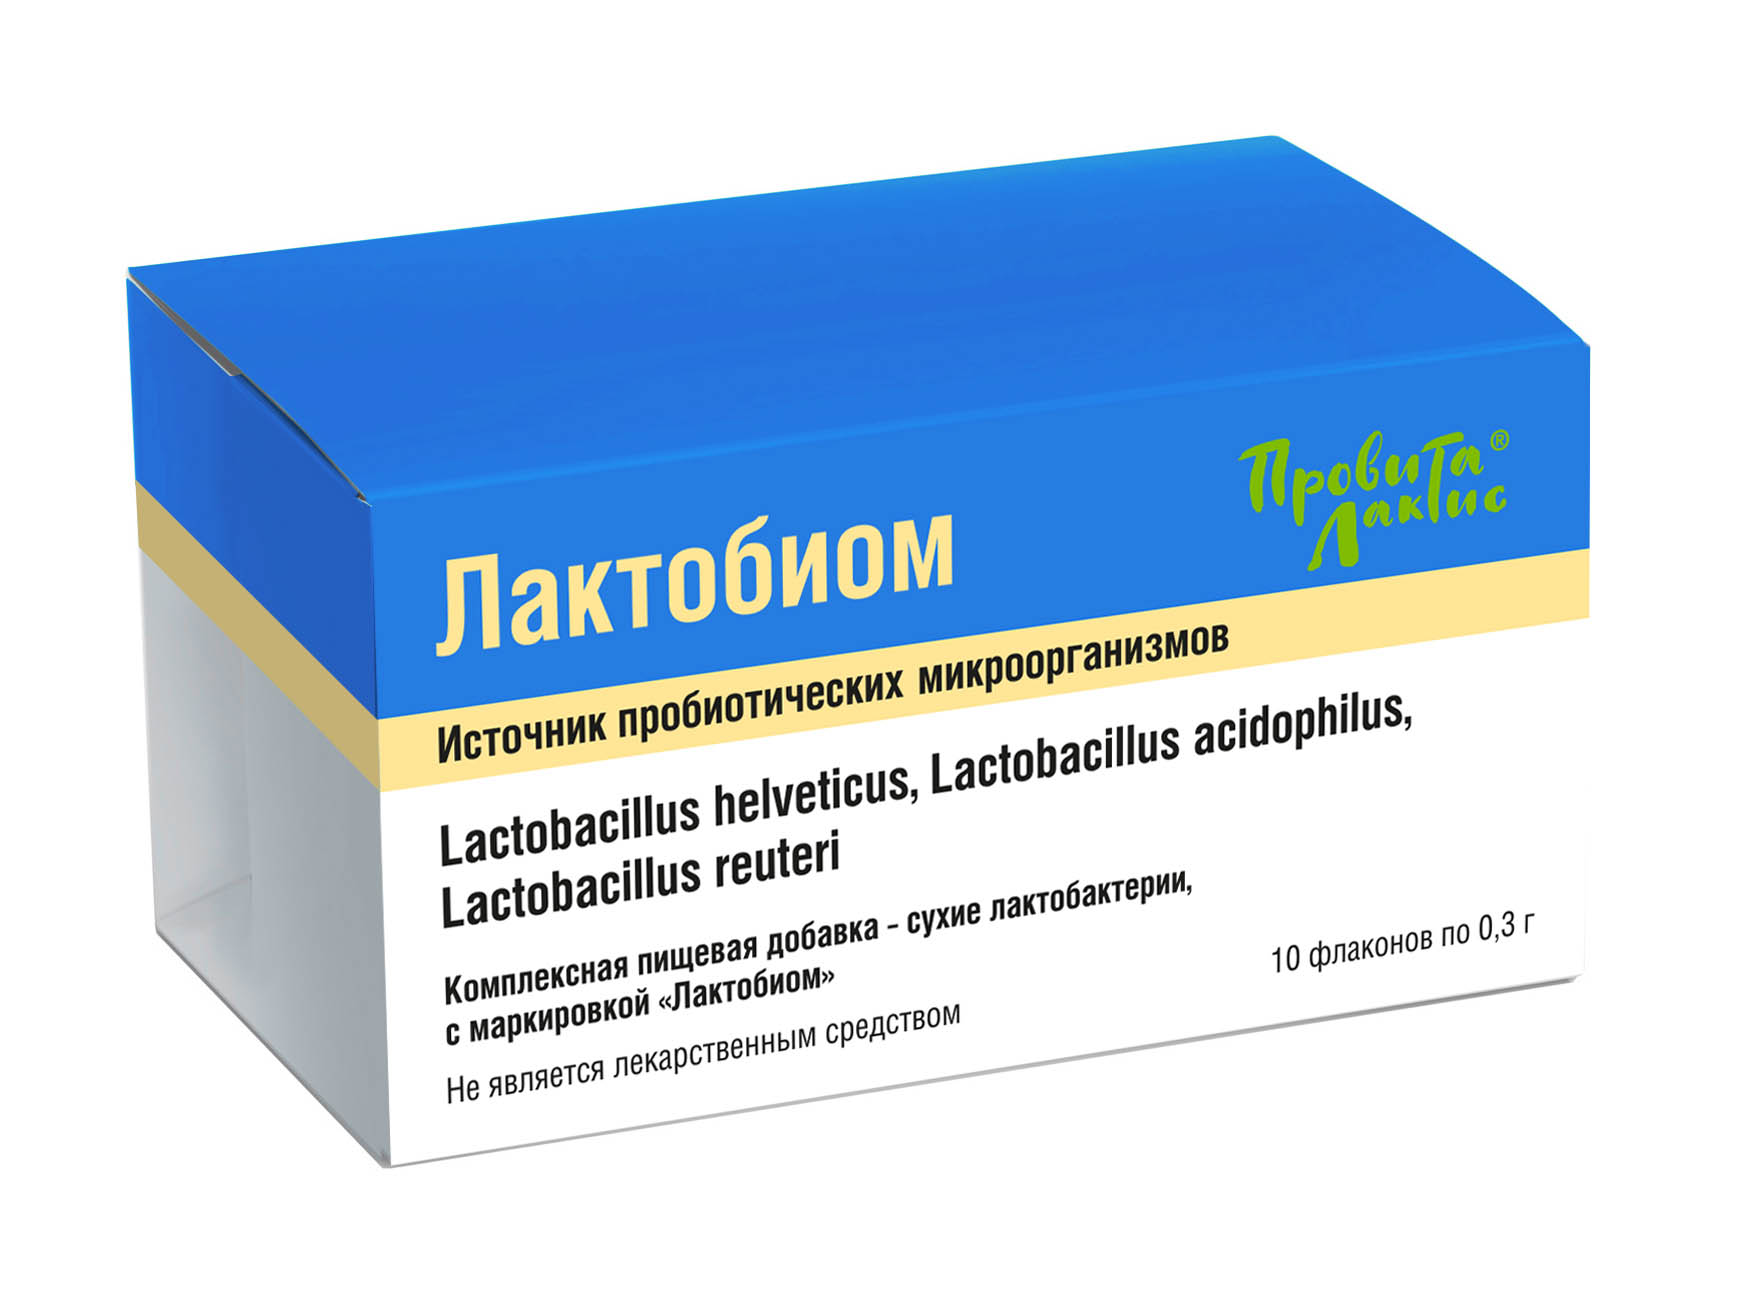 lactobiom